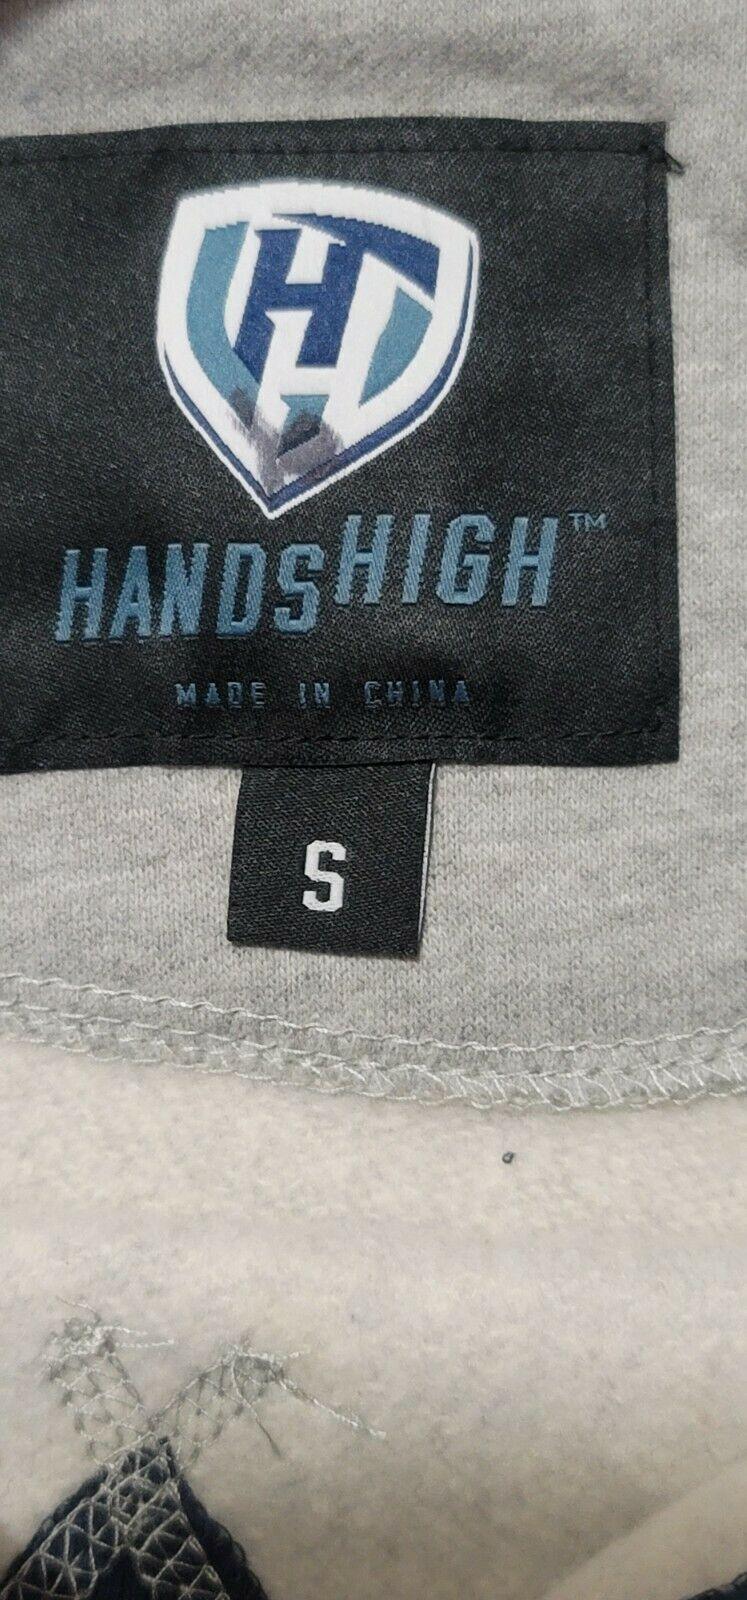 Hands High Mens NFL Super Bowl Hoodie Blue/Gray Size S - SVNYFancy